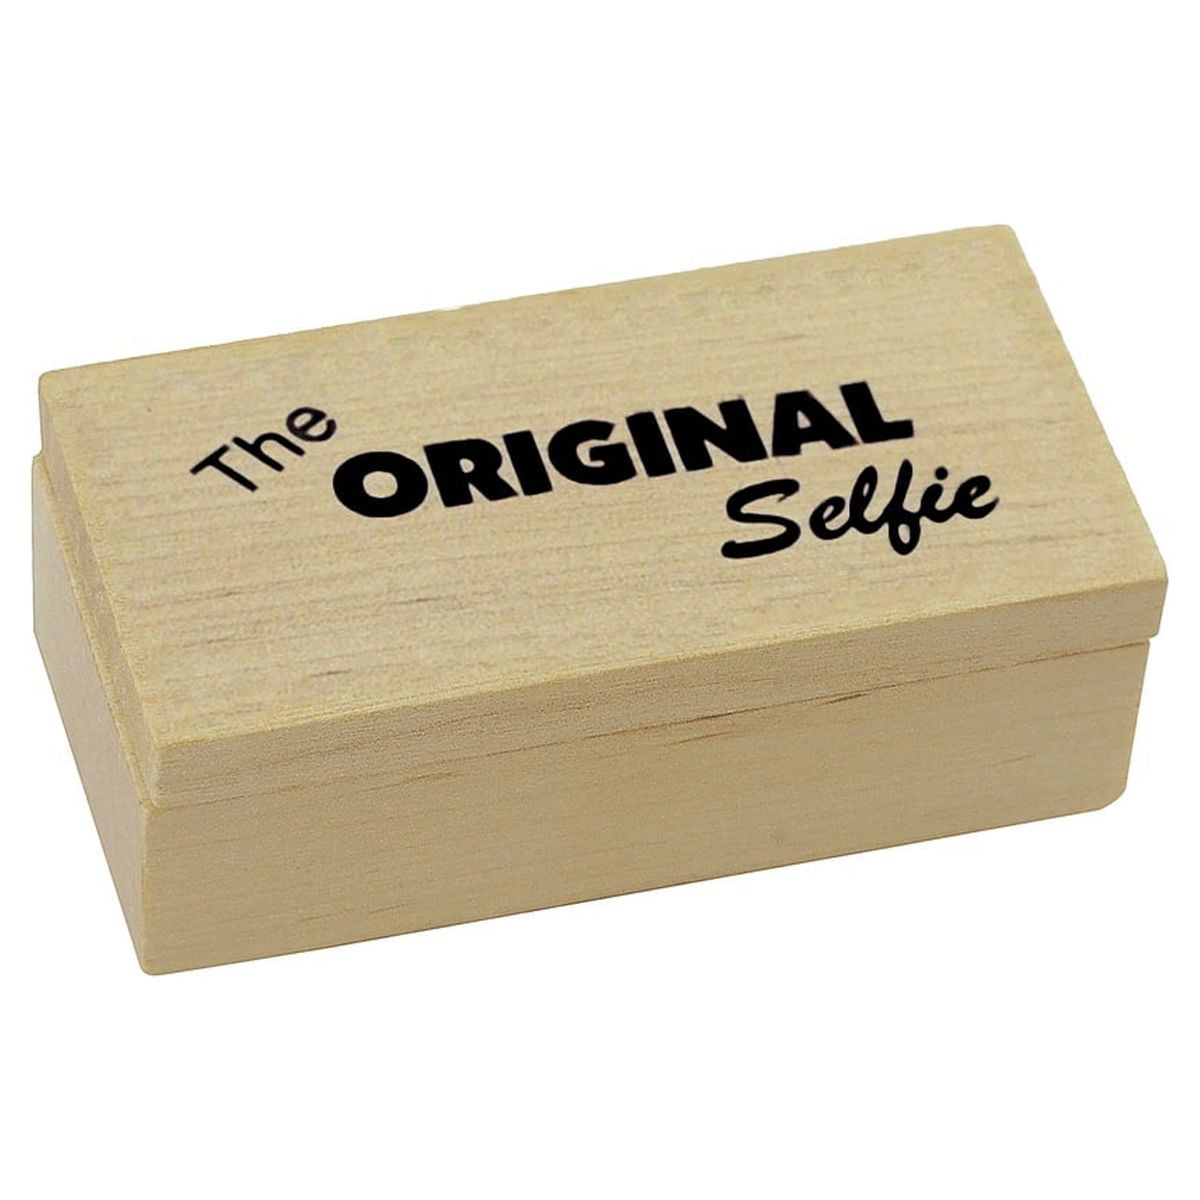 Original Selfie Handheld Wood Box Mirror Gag Gift Practical Joke Prank Toy Trick 7615e316 c561 4080 9d7d 363077fcf029.cfb43e401d872fb28dcf4b918fdfcb5a